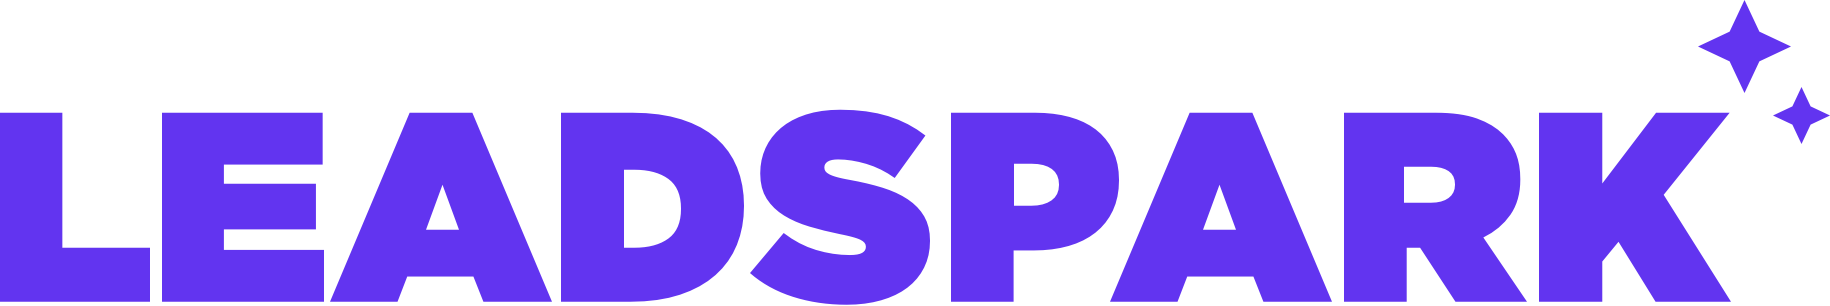 leadspark-logo-viole